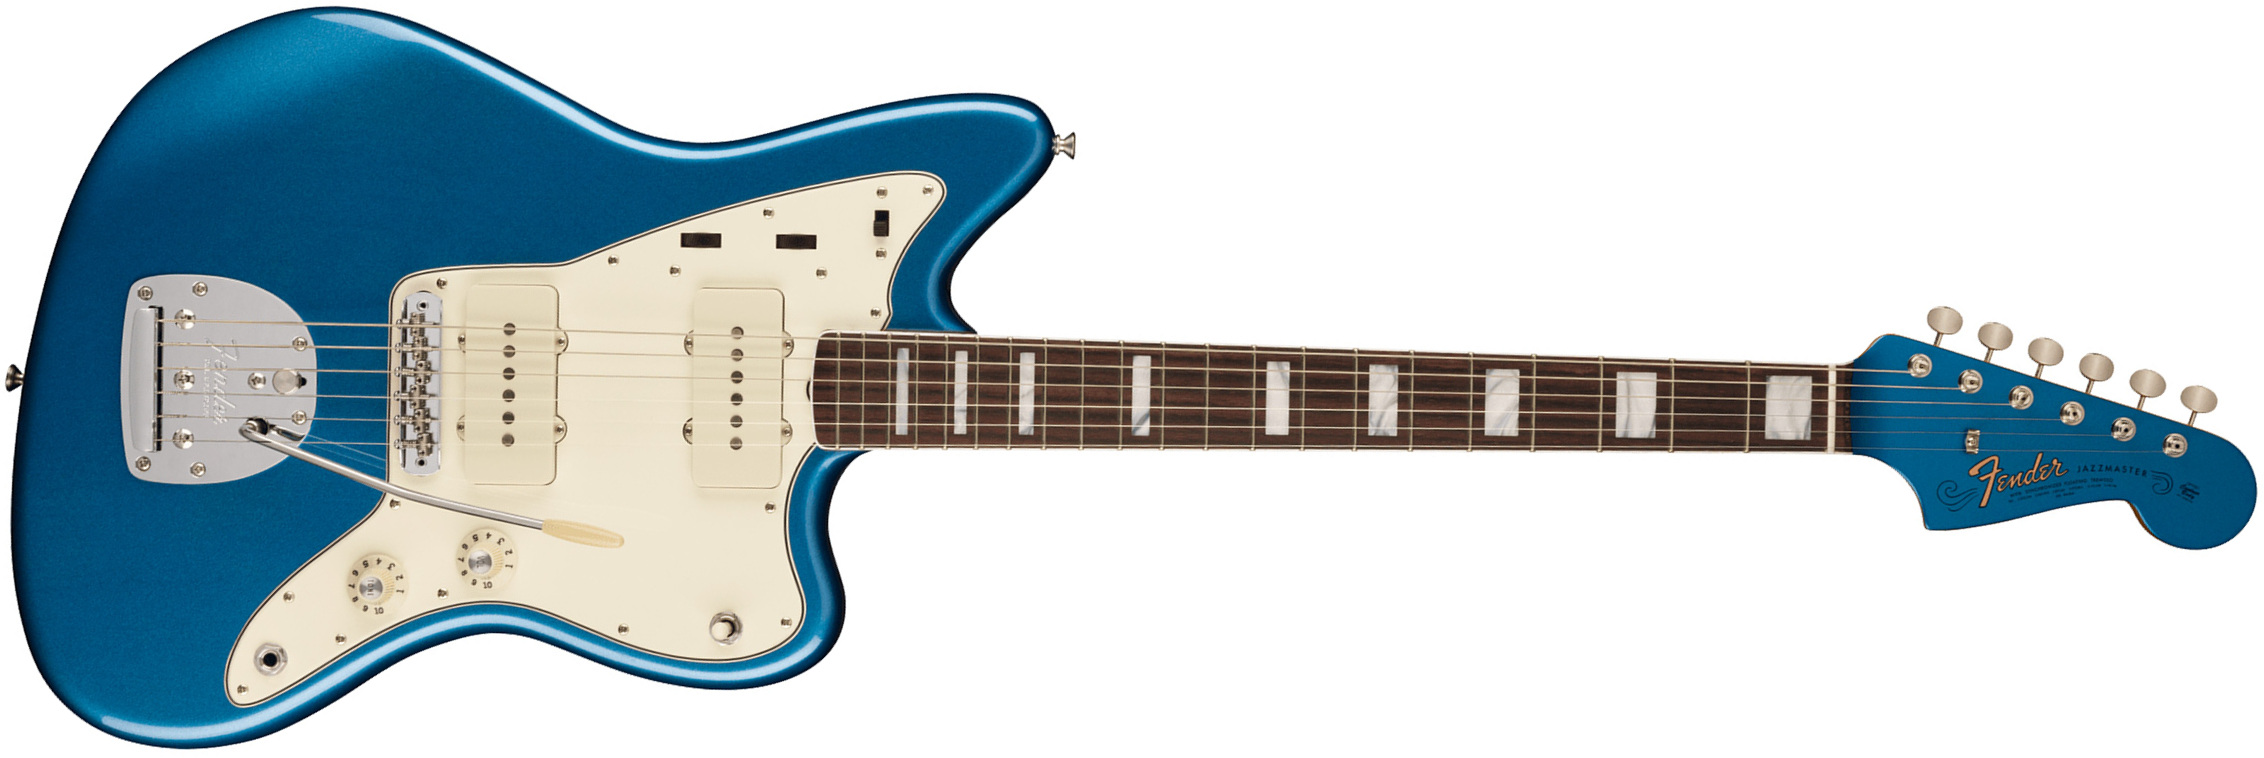 Fender Jazzmaster 1966 American Vintage Ii Usa Sh Trem Rw - Lake Placid Blue - Retro rock electric guitar - Main picture